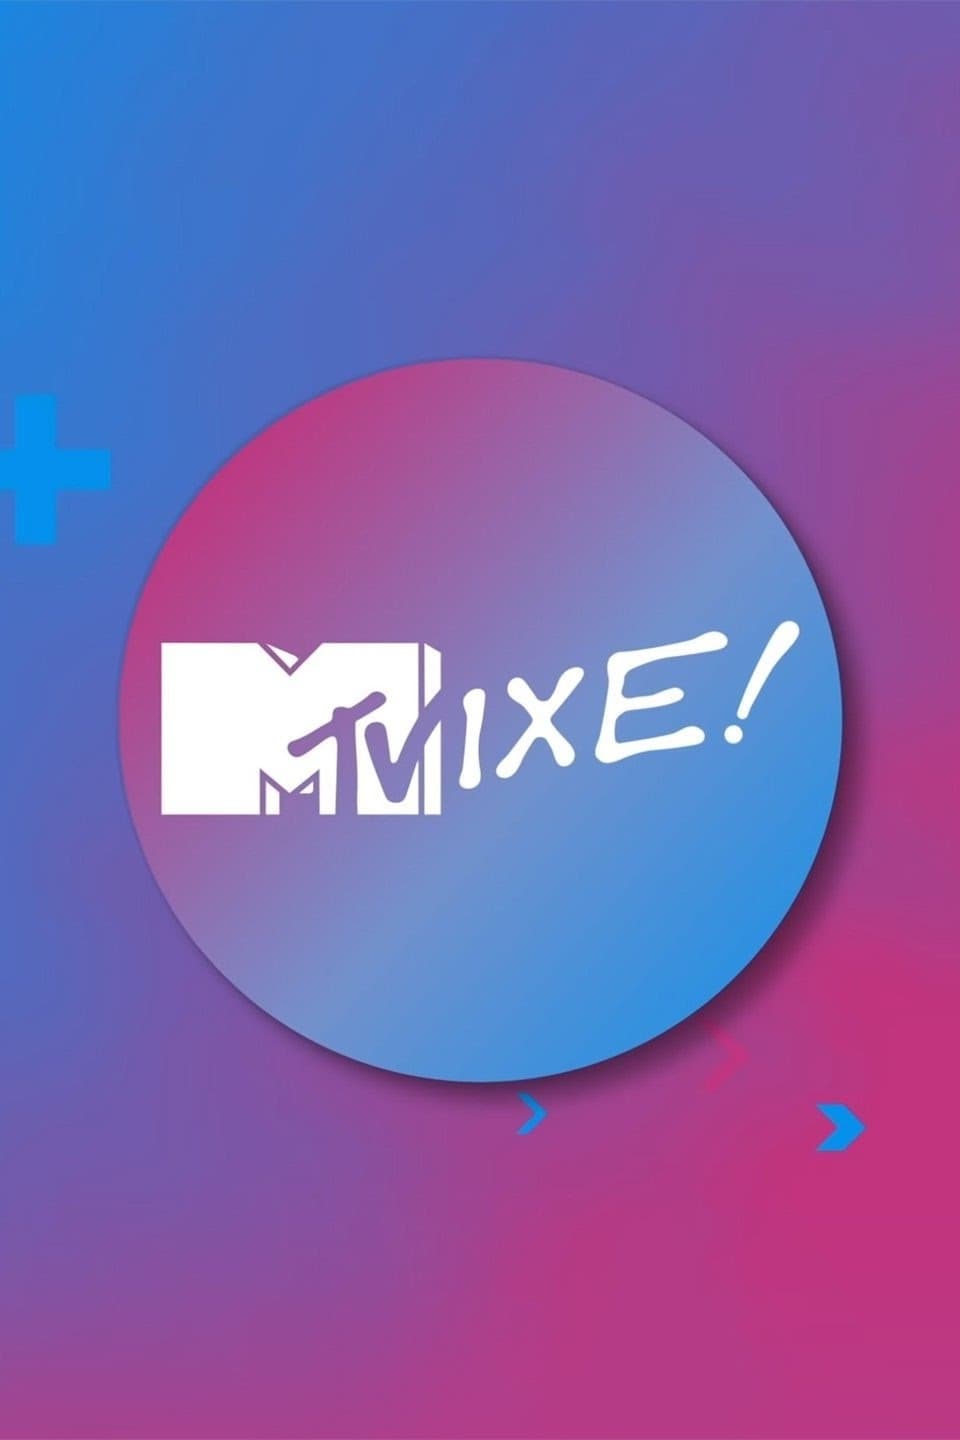 MTVixe!